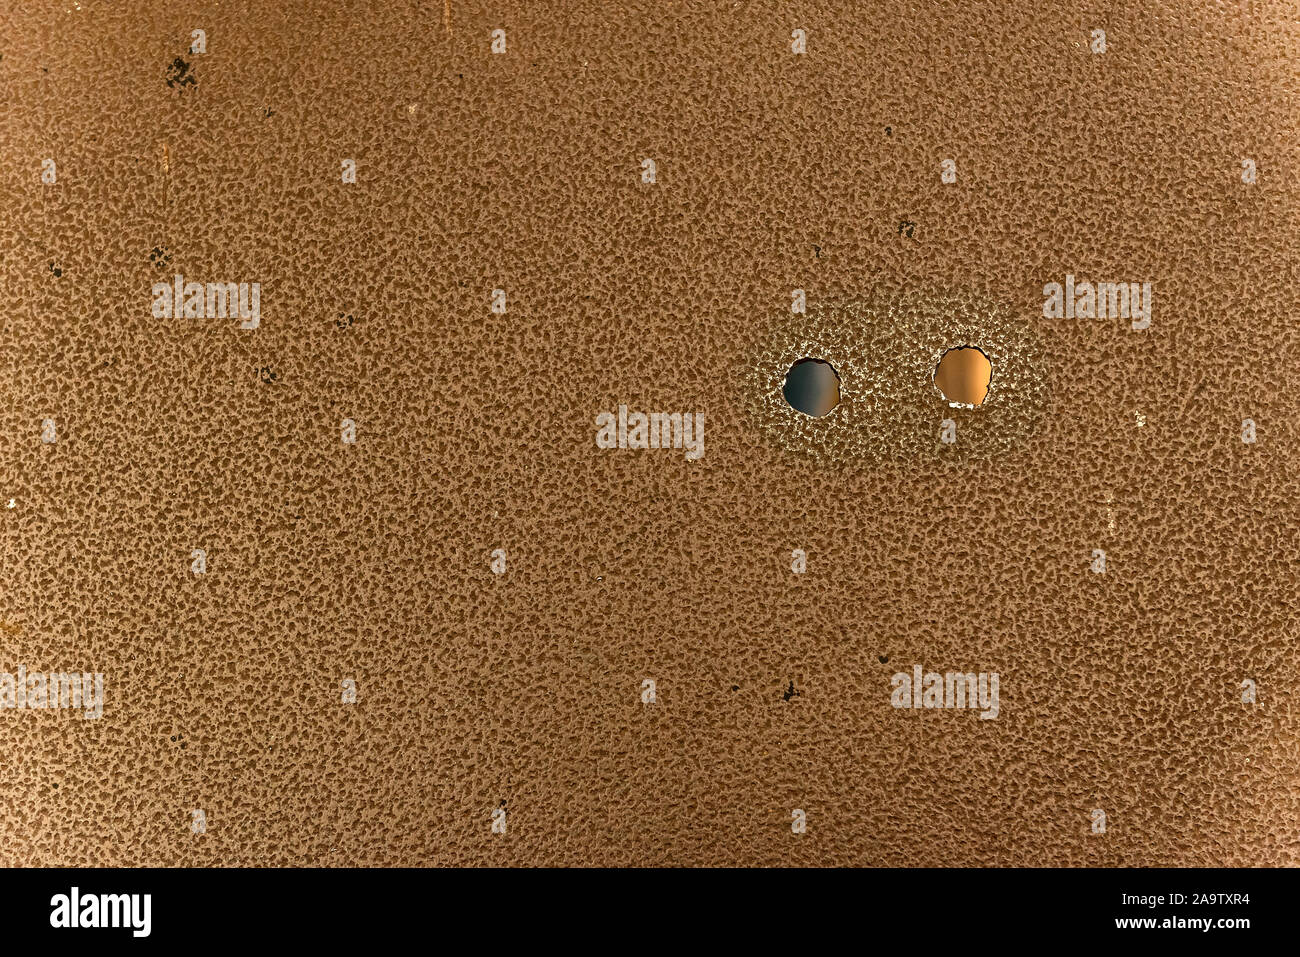 Rust holes -Fotos und -Bildmaterial in hoher Auflösung – Alamy